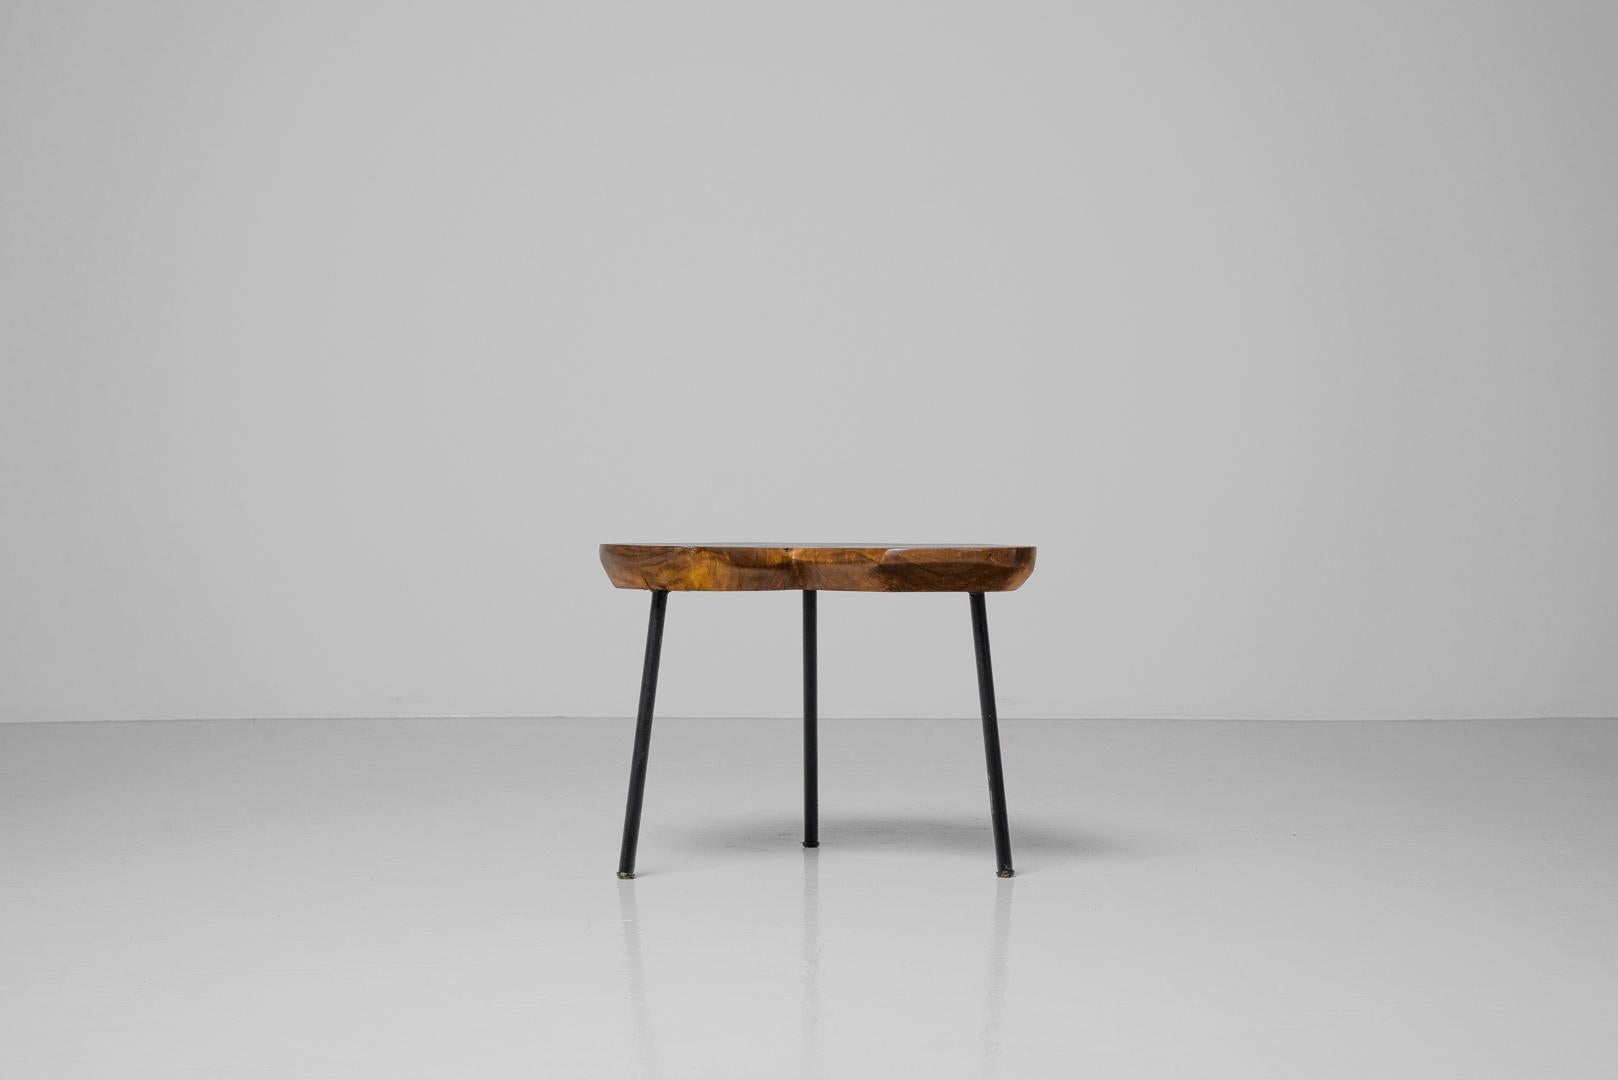 Metal Forme libre stool in elmwood France 1950